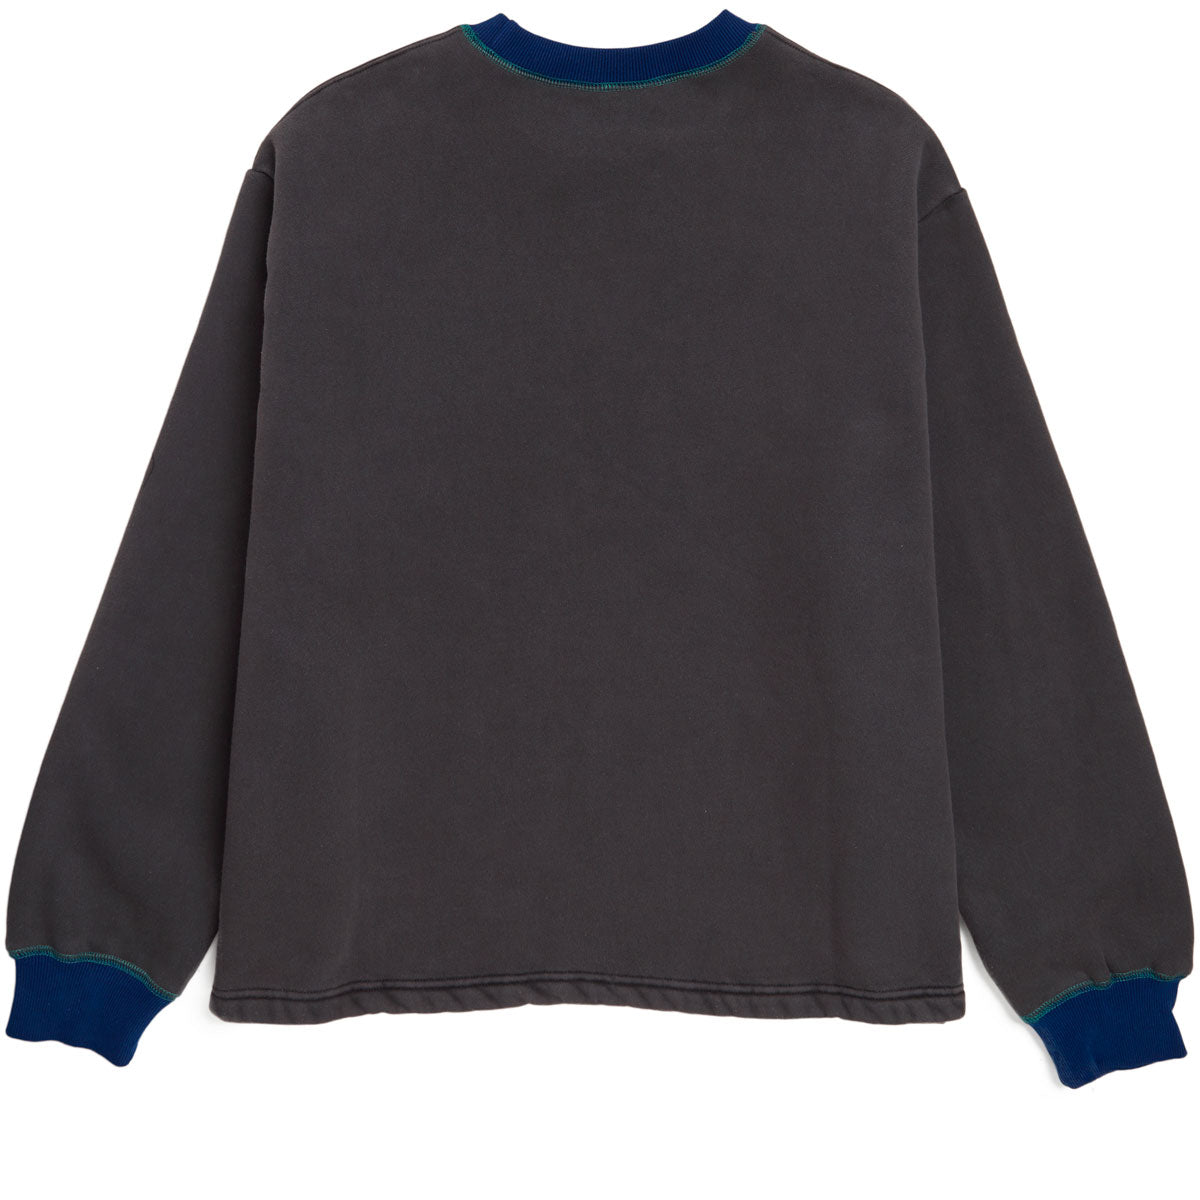 WKND Pigment Jumper Sweatshirt - Black image 2